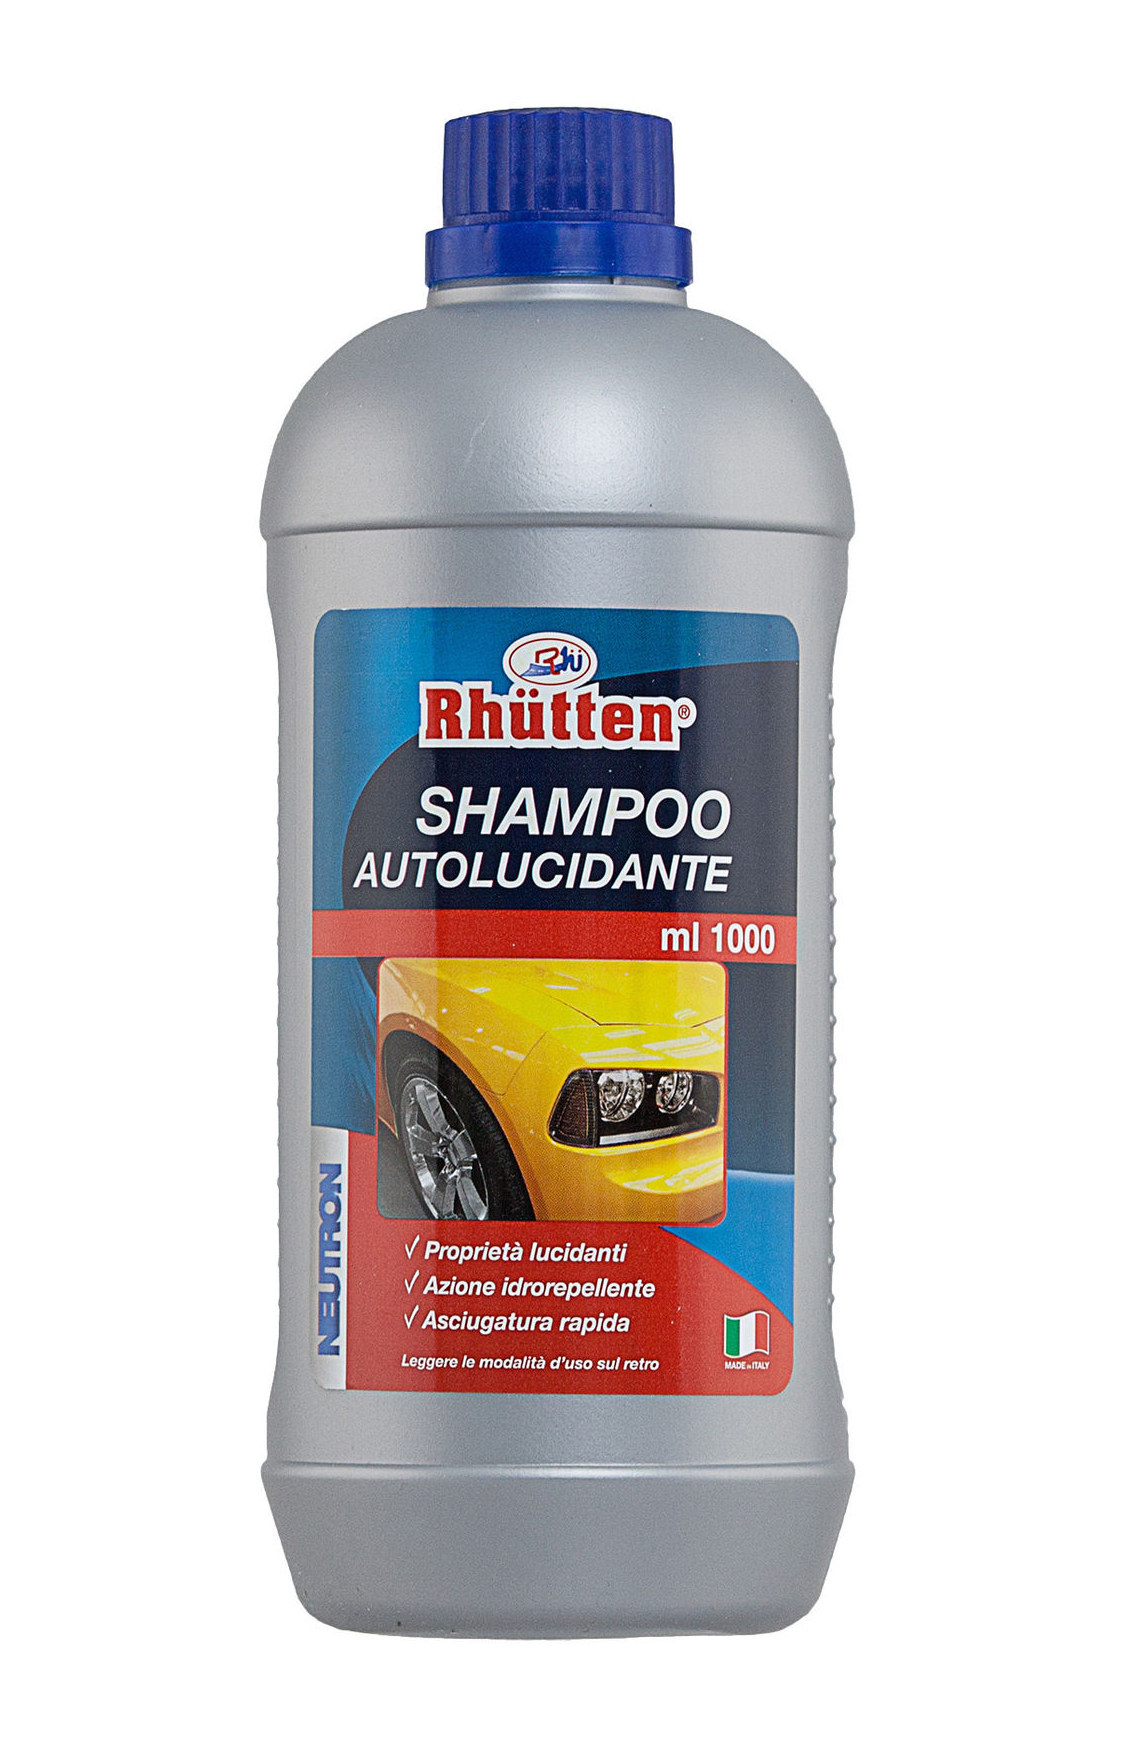 Shampoo autolucidante neutron 1l